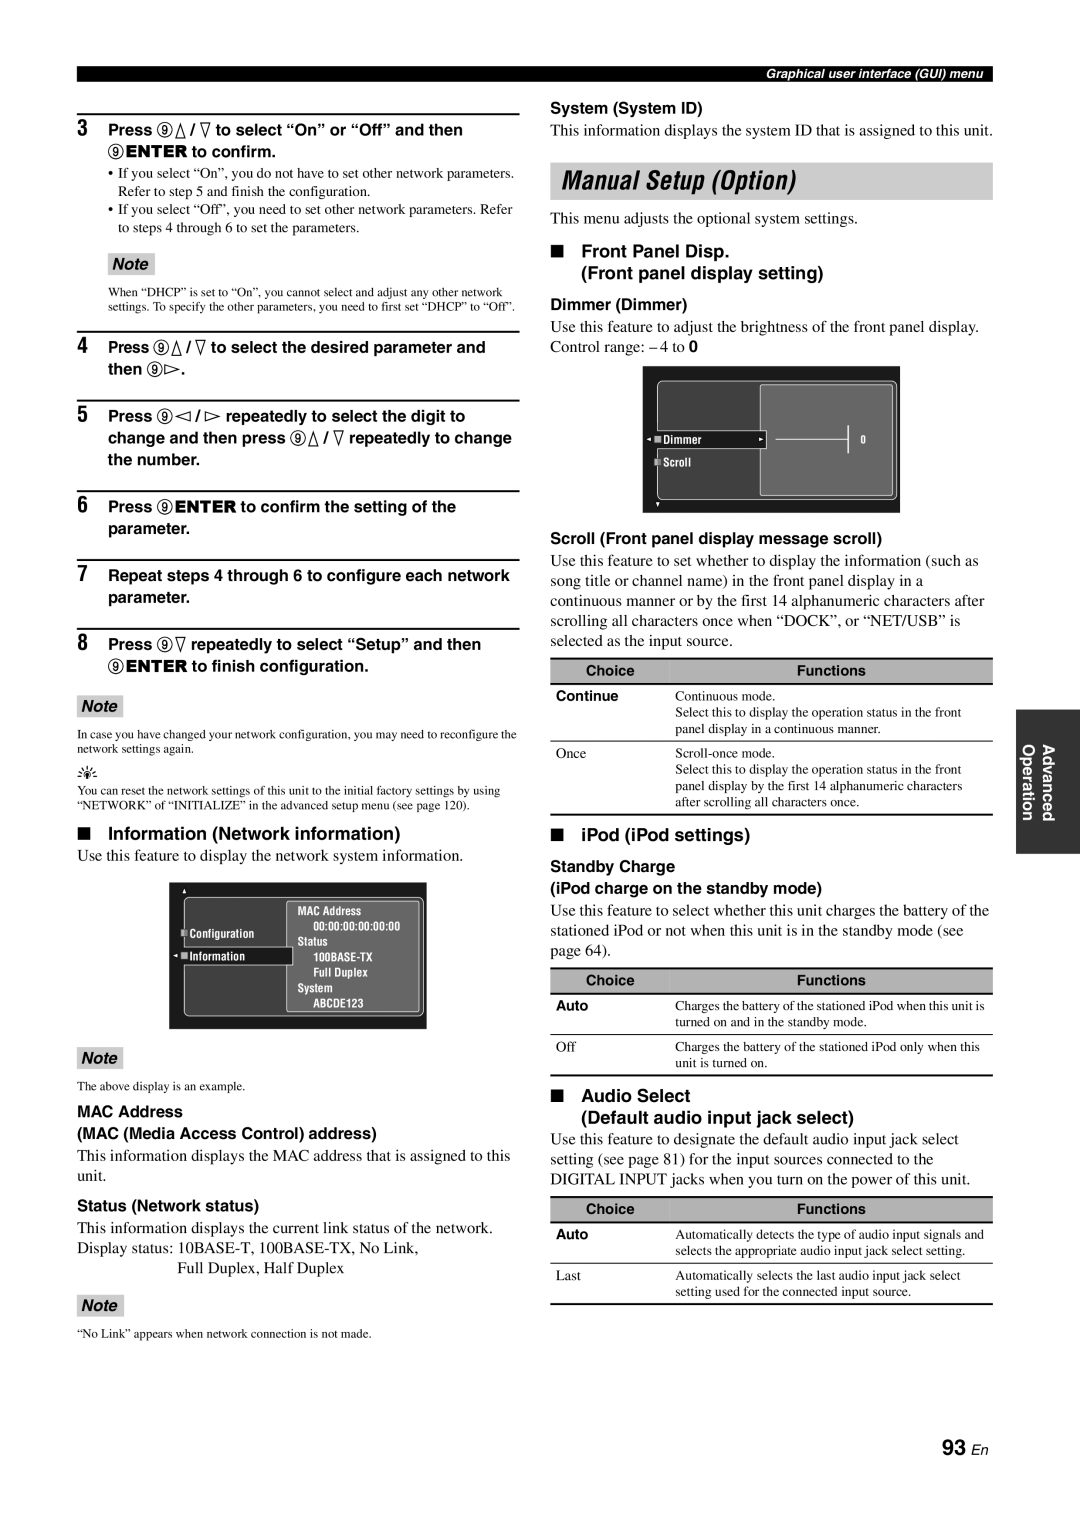 Yamaha DSP-Z11 Manual Setup Option, 93 En, Information Network information, Front Panel Disp Front panel display setting 